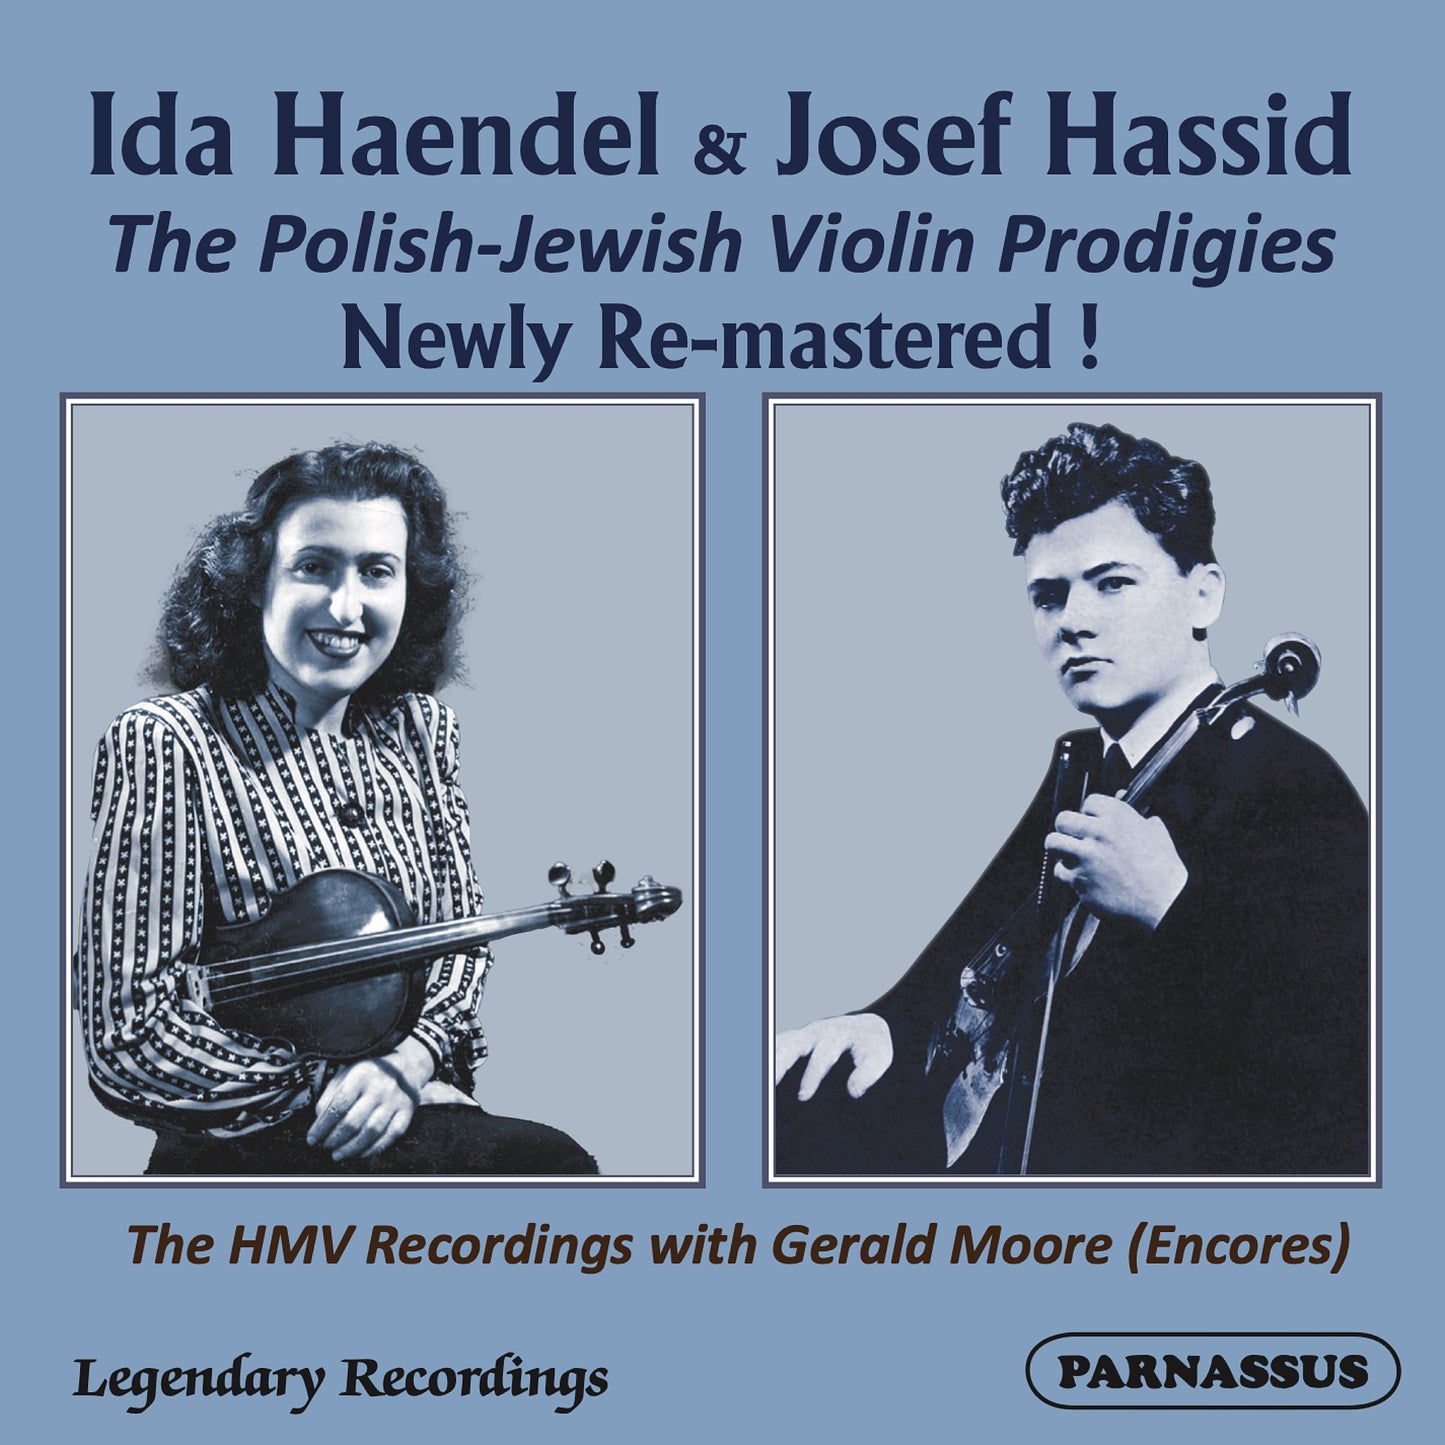 IDA HAENDEL & JOSEF HASSID: THE POLISH-JEWISH VIOLIN PRODIGIES (PDF BOOKLET)